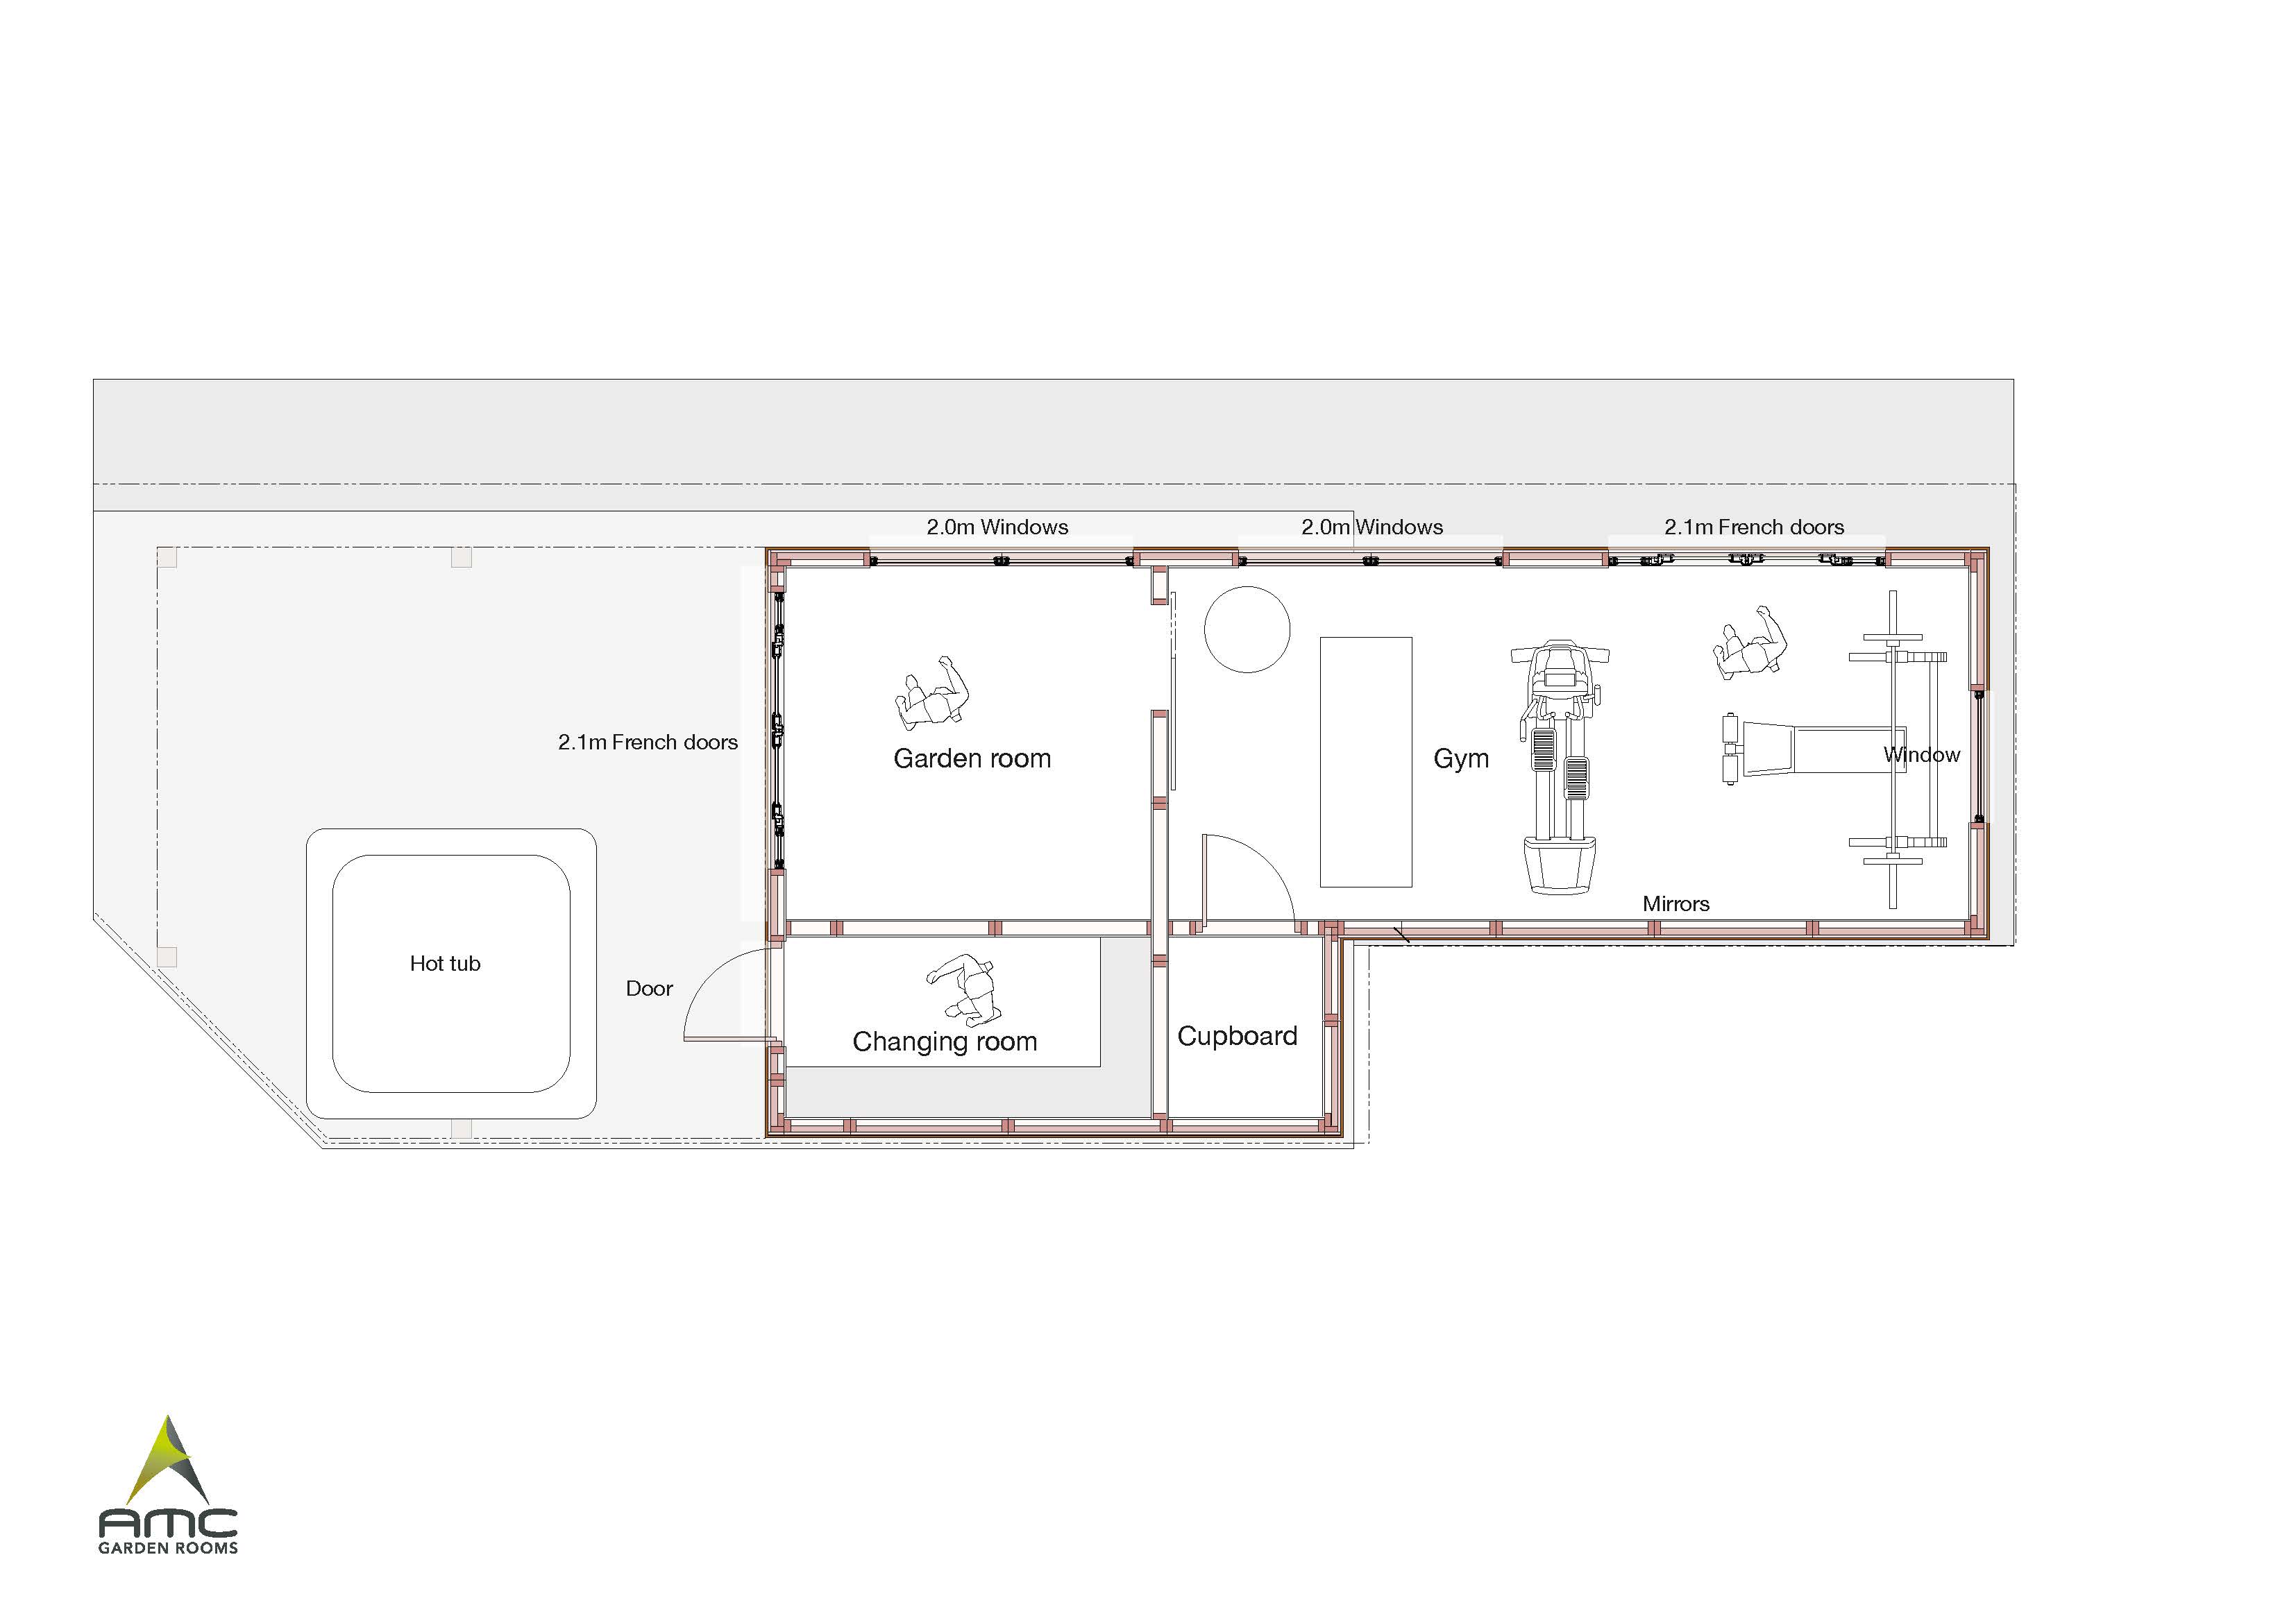 Floor plan for the garden gym suite by AMC Garden Rooms